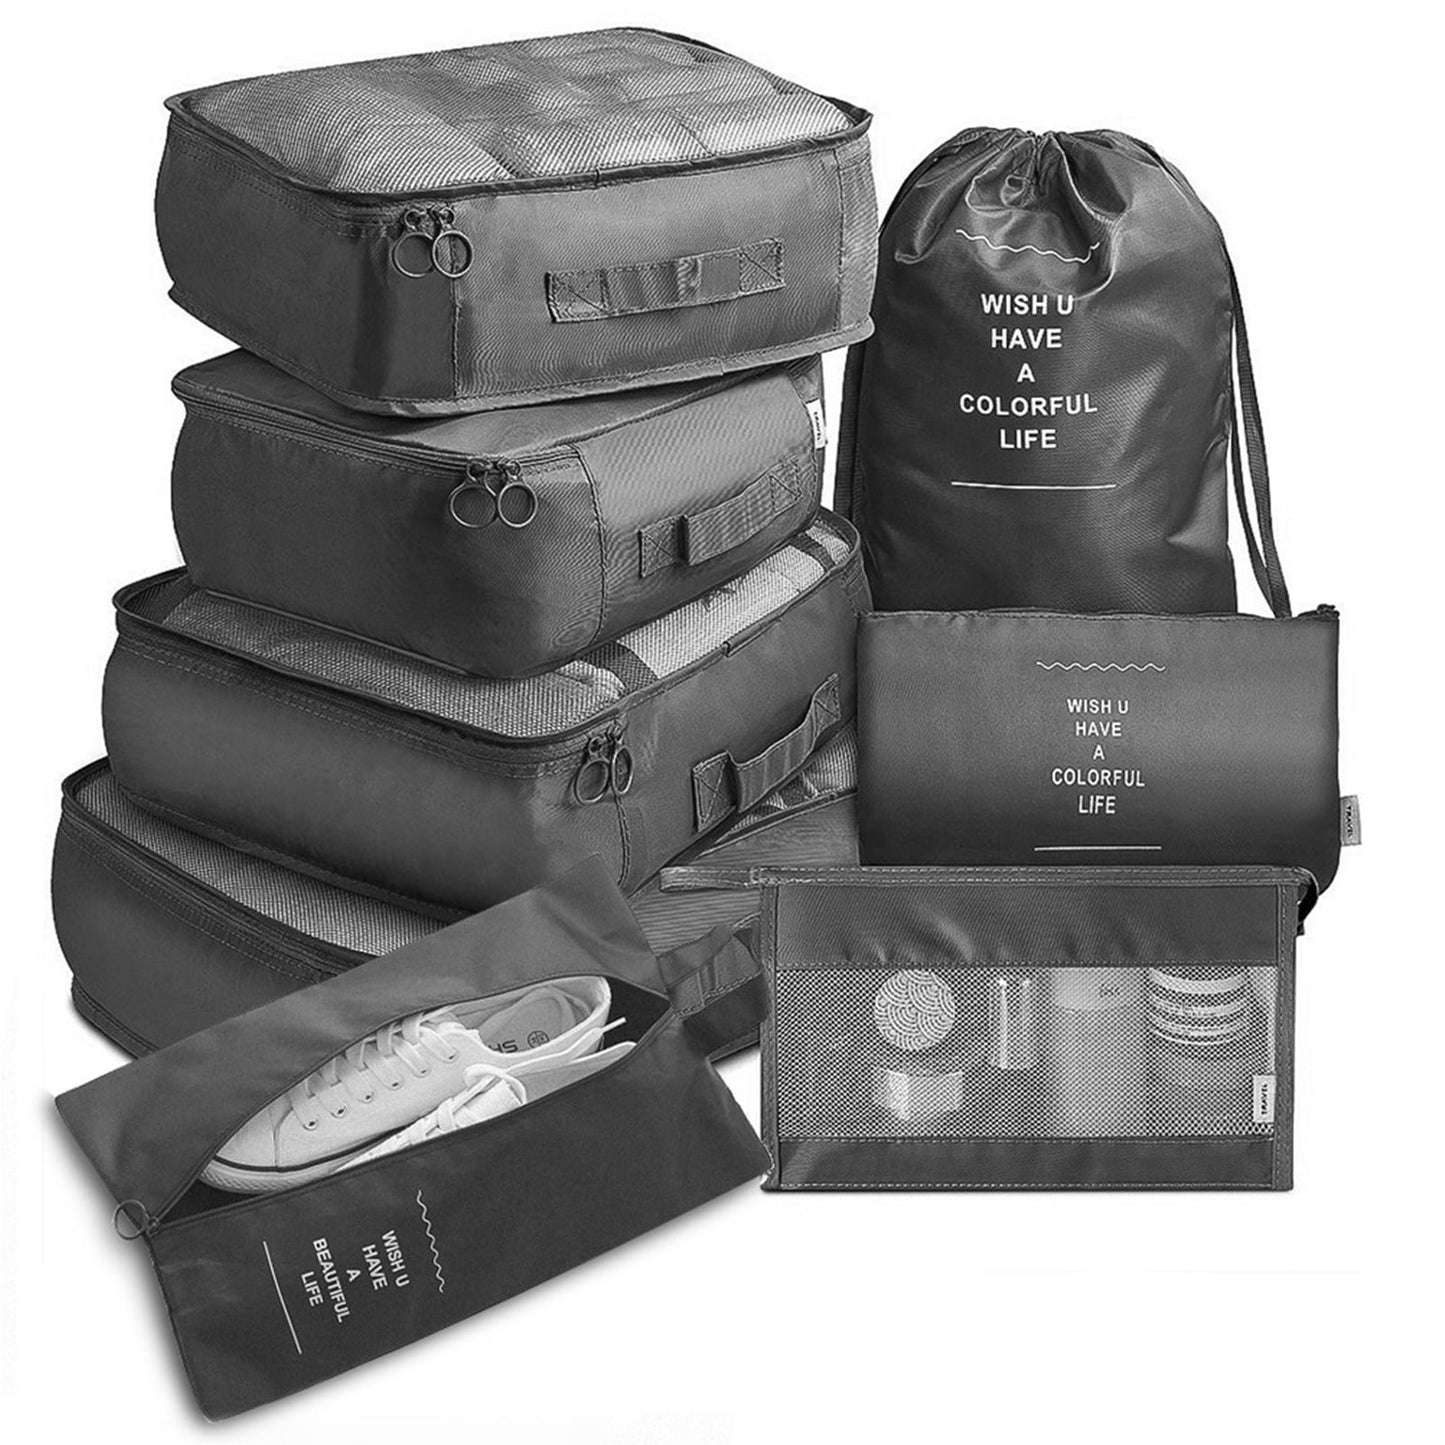 Hybrica GO-ON Premium Travel Bag Organizer Packing Cubes set of 8